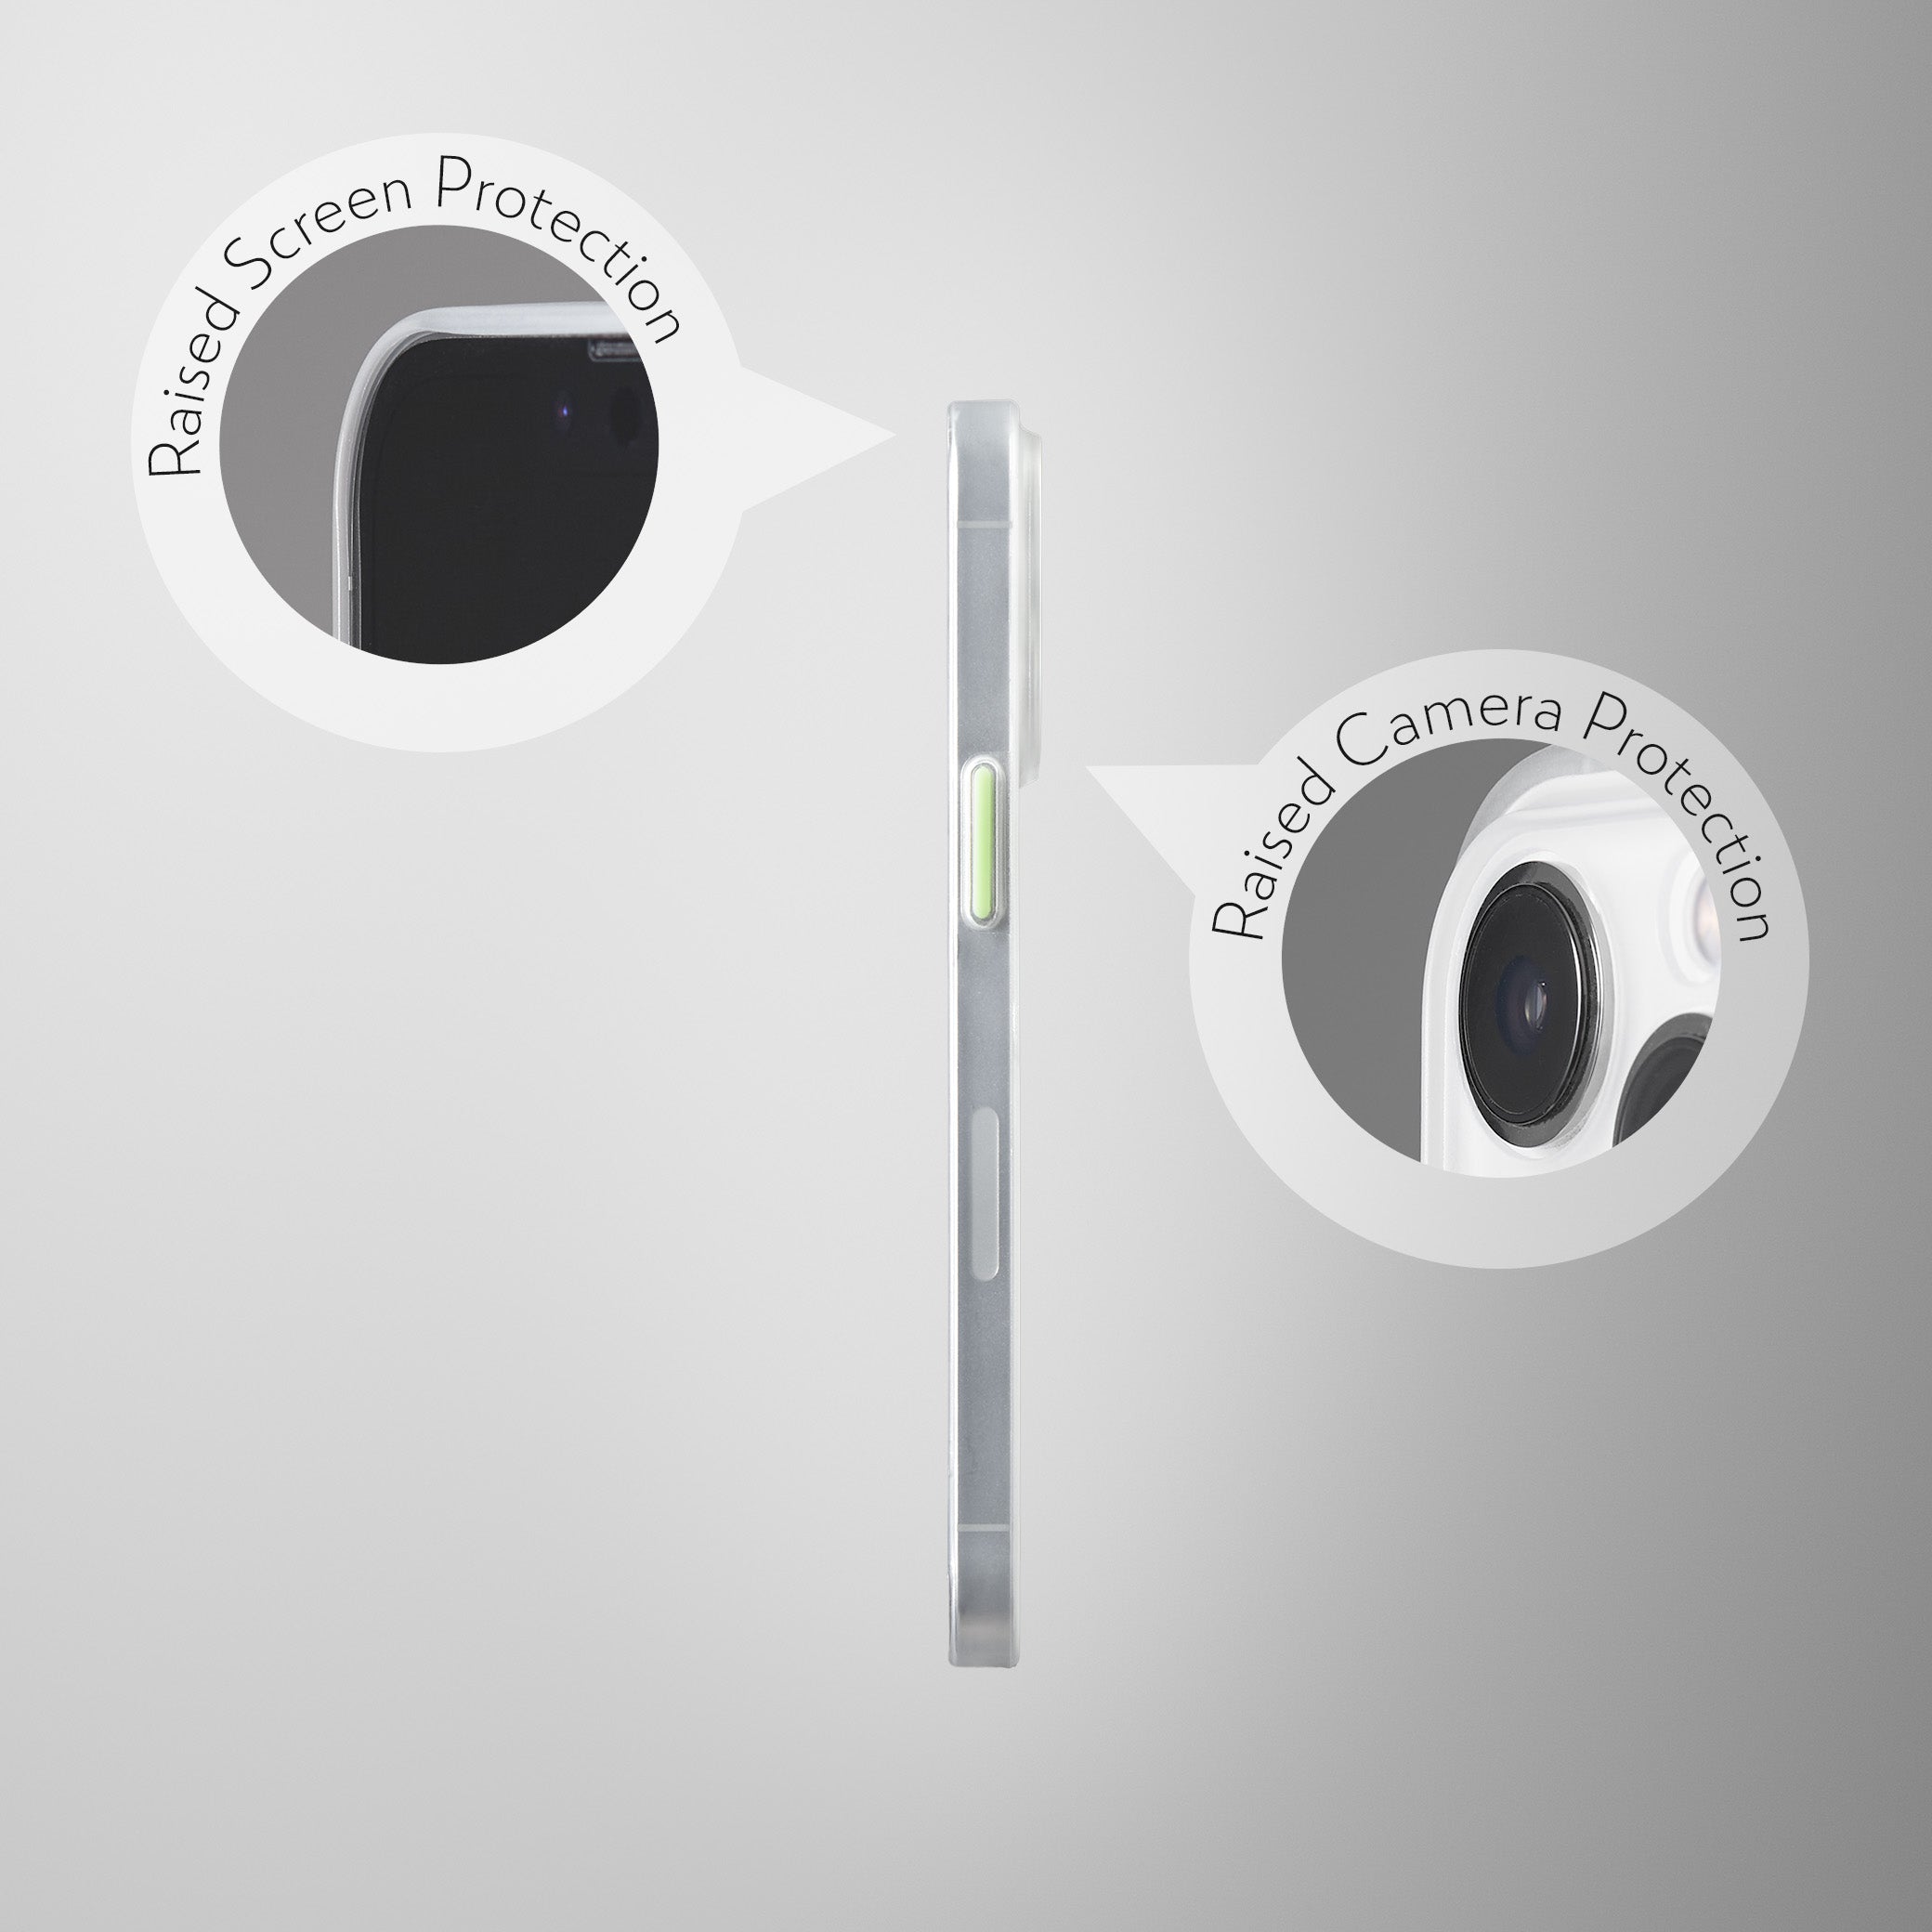 Super Slim Case 2.0 for iPhone 14 Pro Max - Glazed Frost White